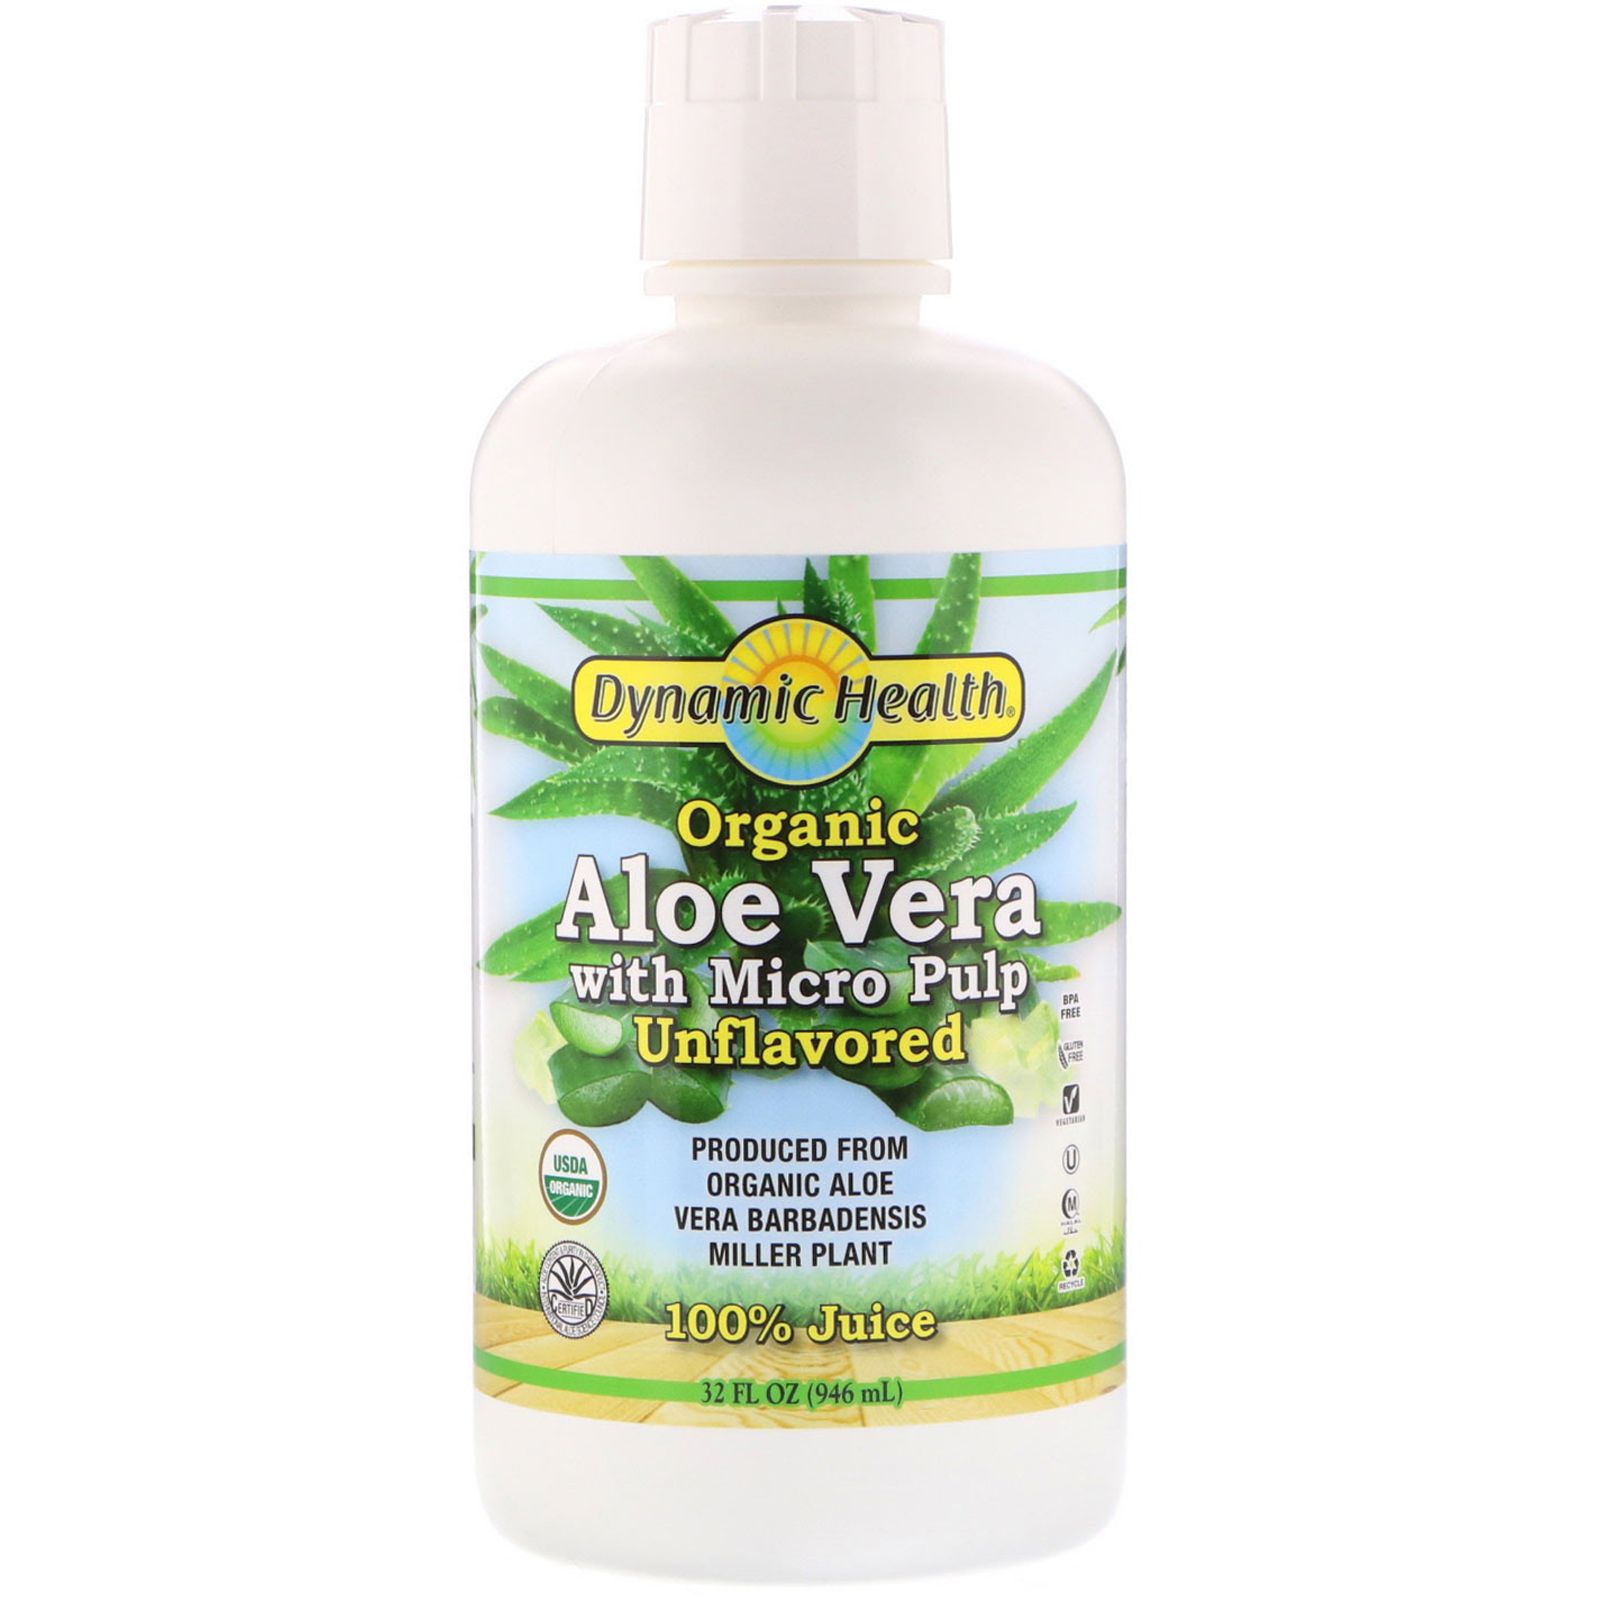 Dynamic Health Laboratories Organic Aloe Vera Juice with Micro Pulp 100% Juice Unflavored 32 fl oz (946 ml)